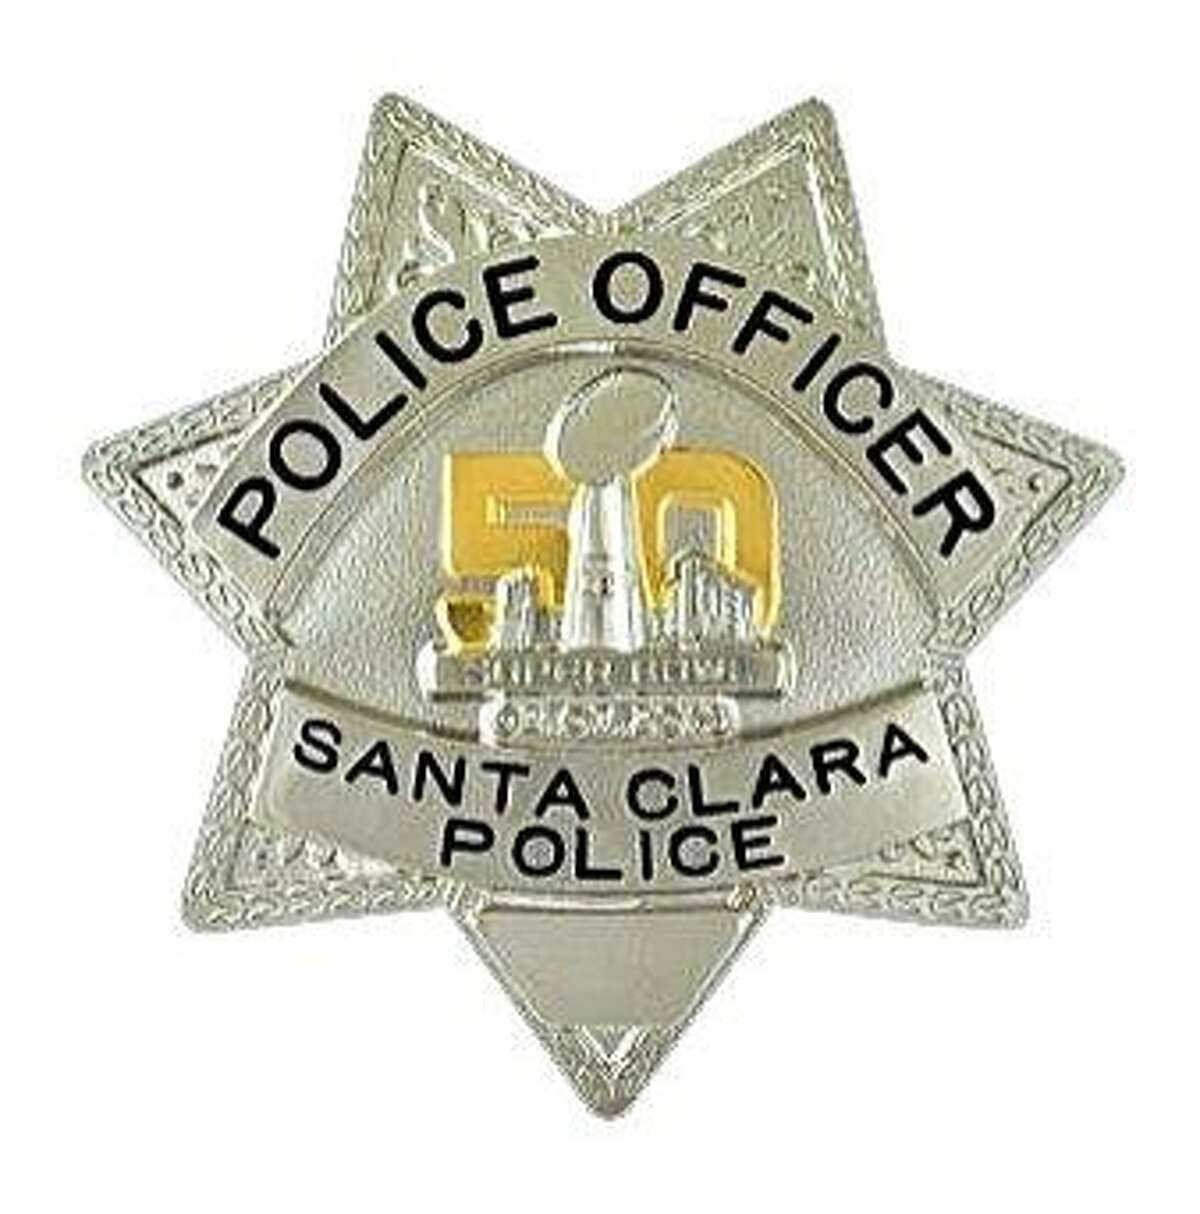 Santa Clara police department badge with Superbowl logo.